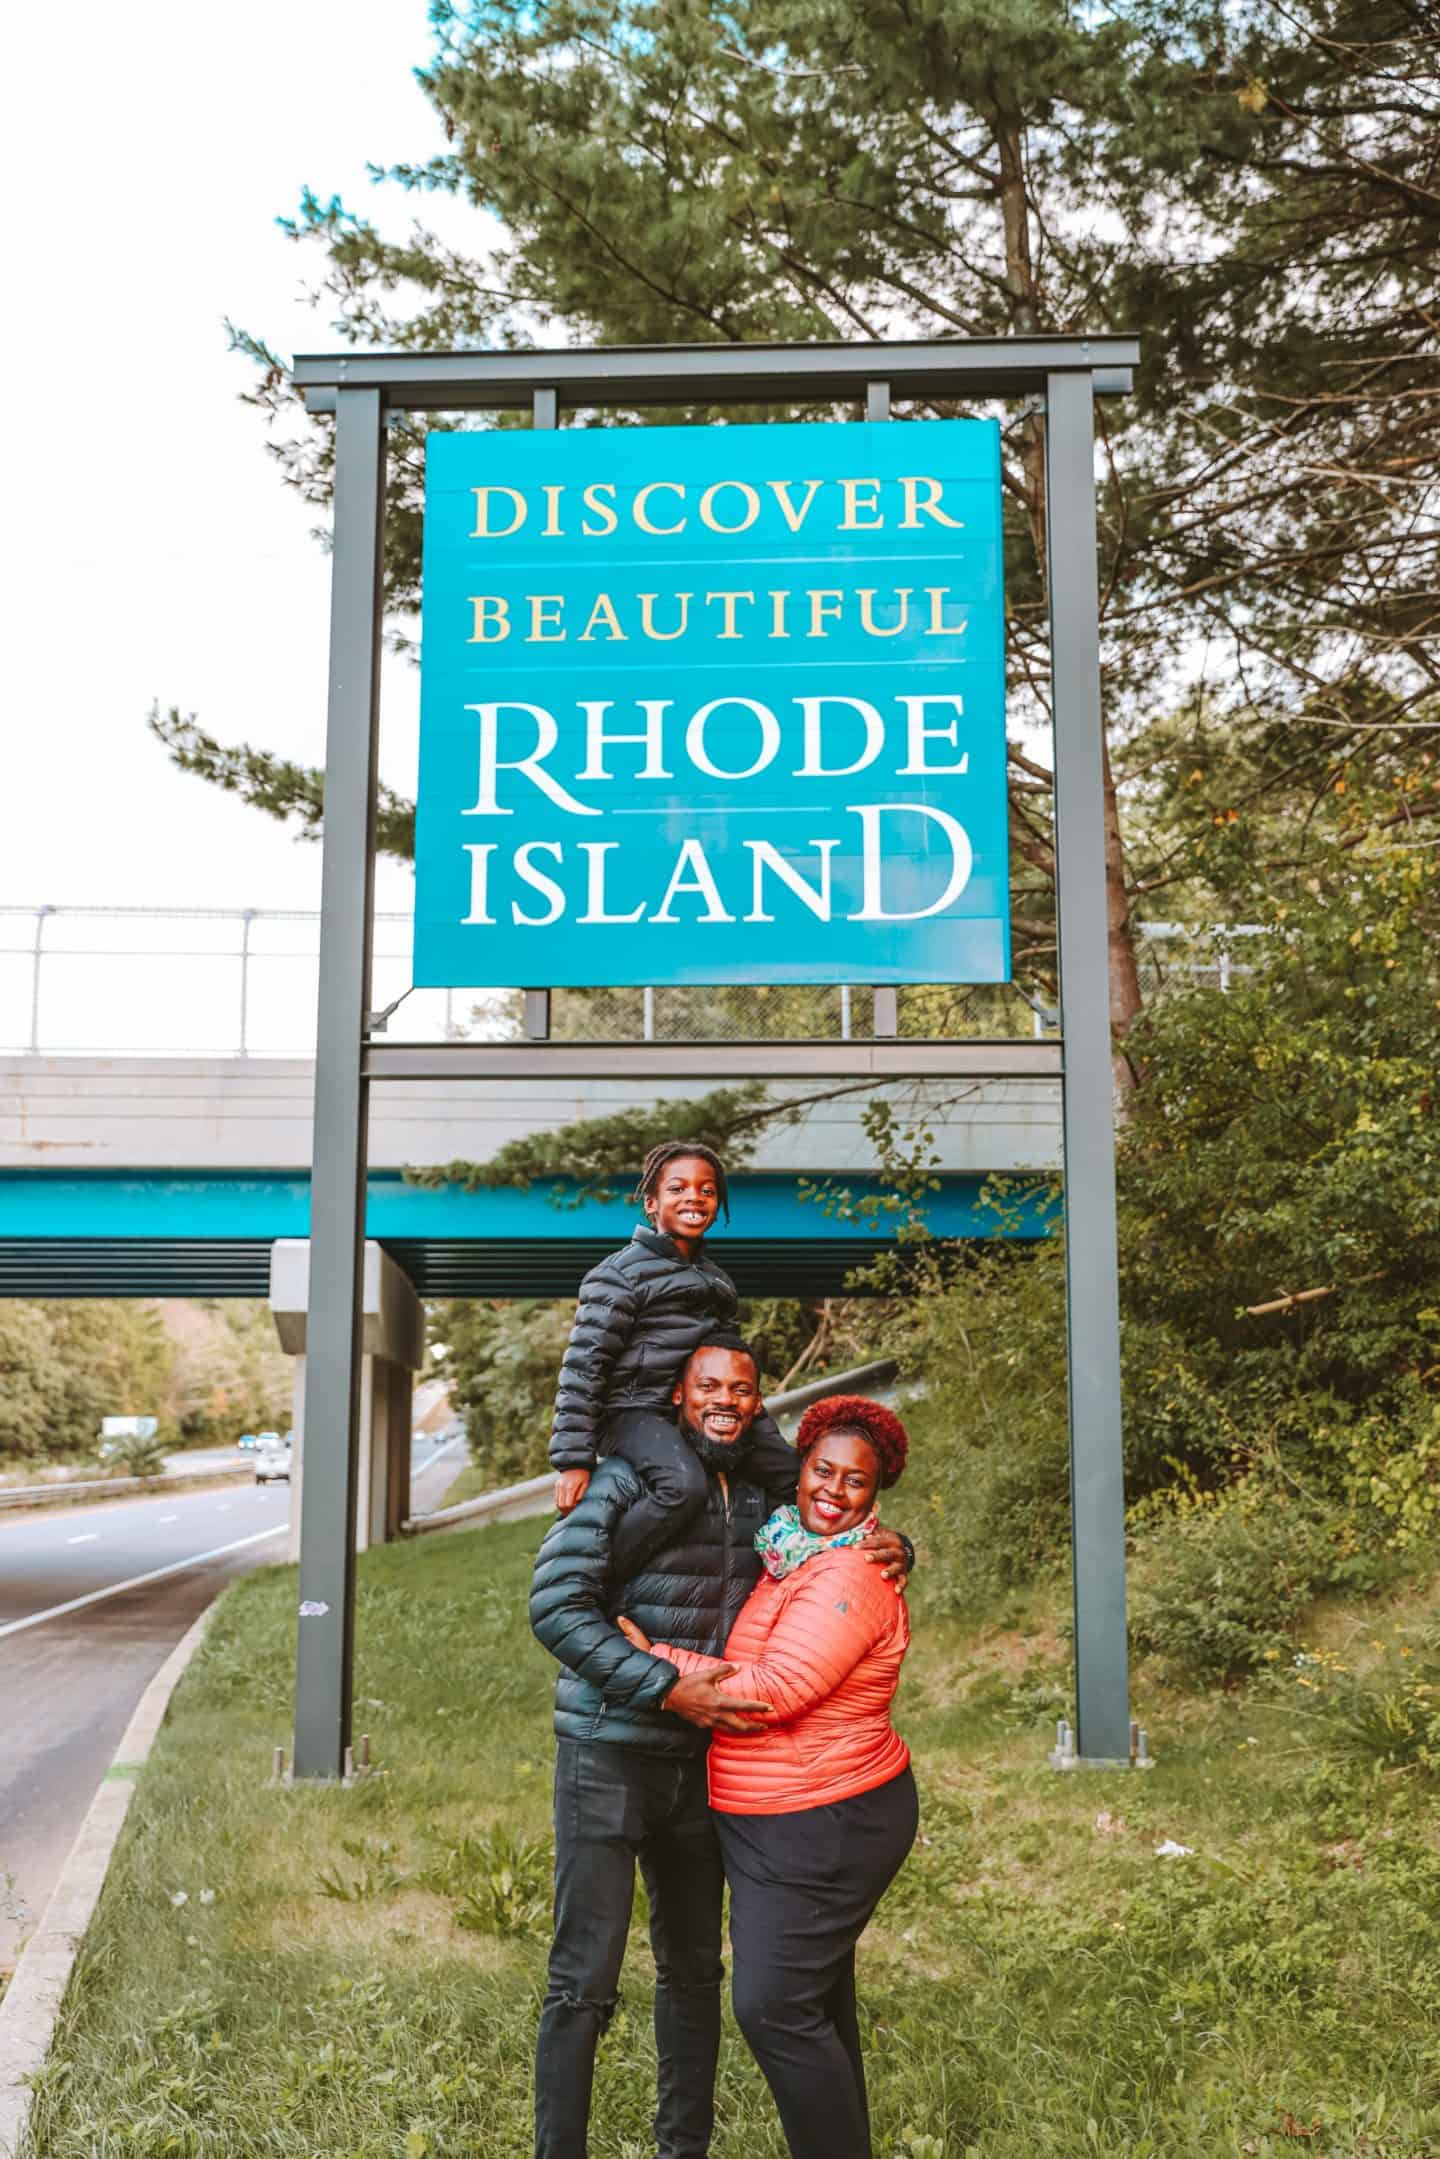 Rhode Island welcome sign